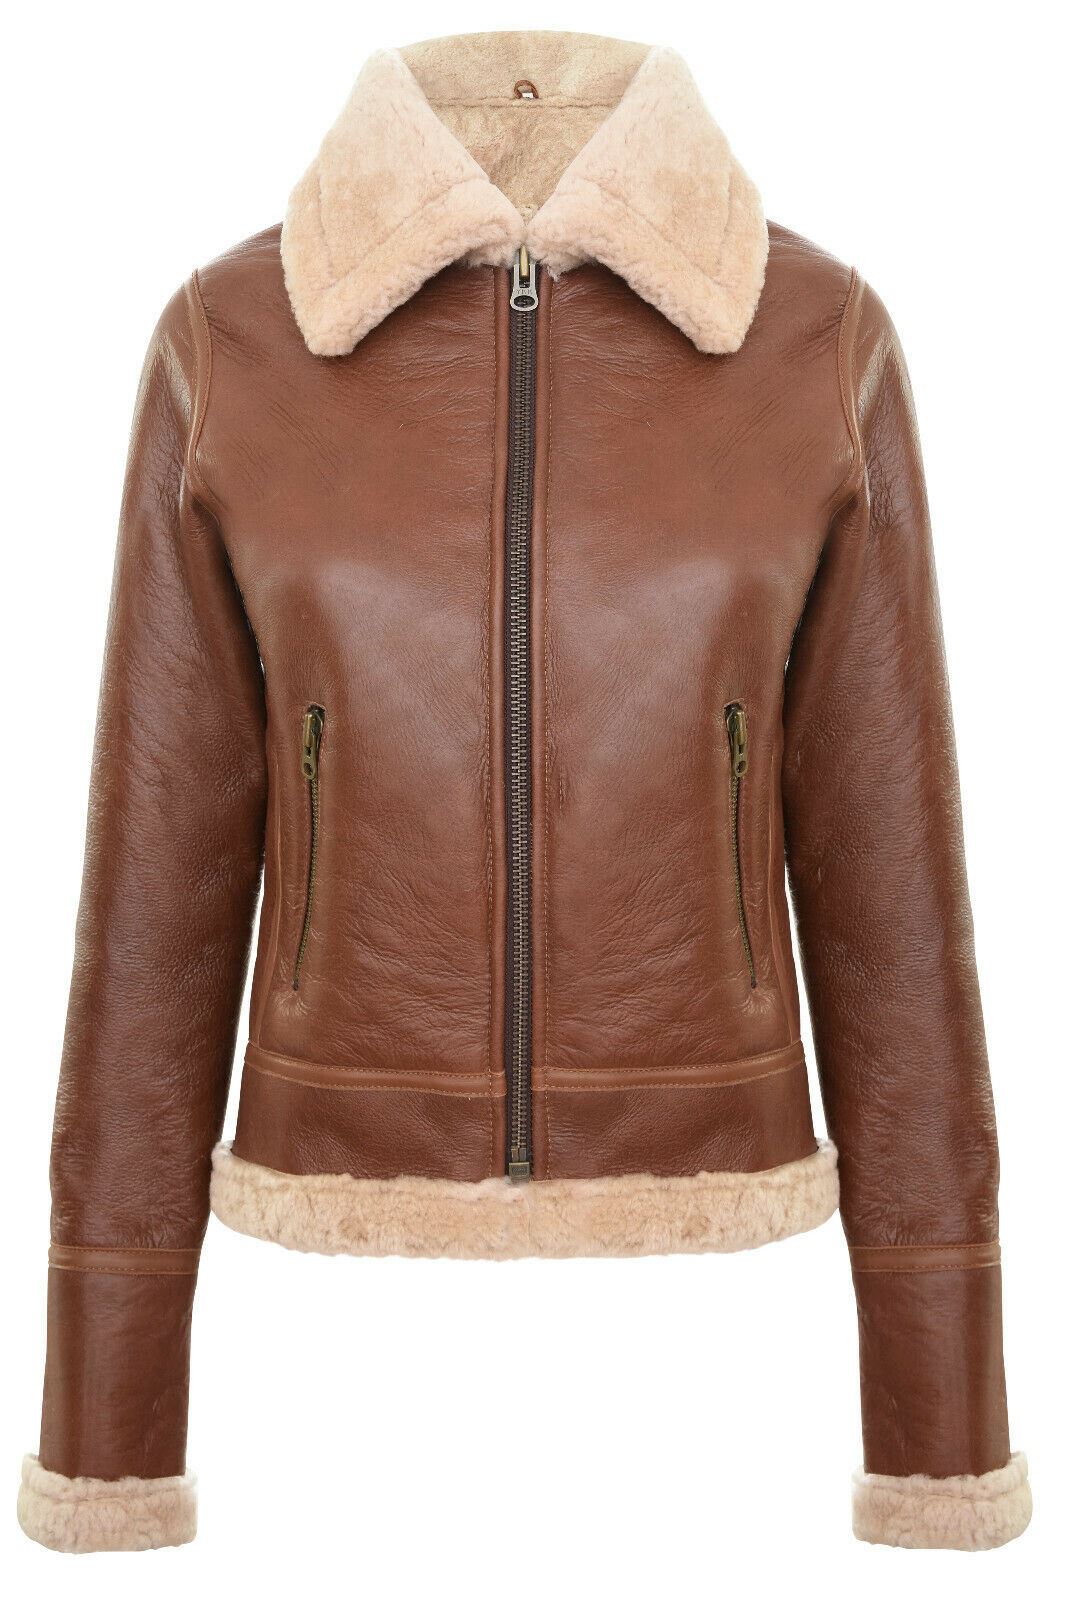 Womens B3 Sheepskin Tan Leather Jacket-Otley - Upperclass Fashions 